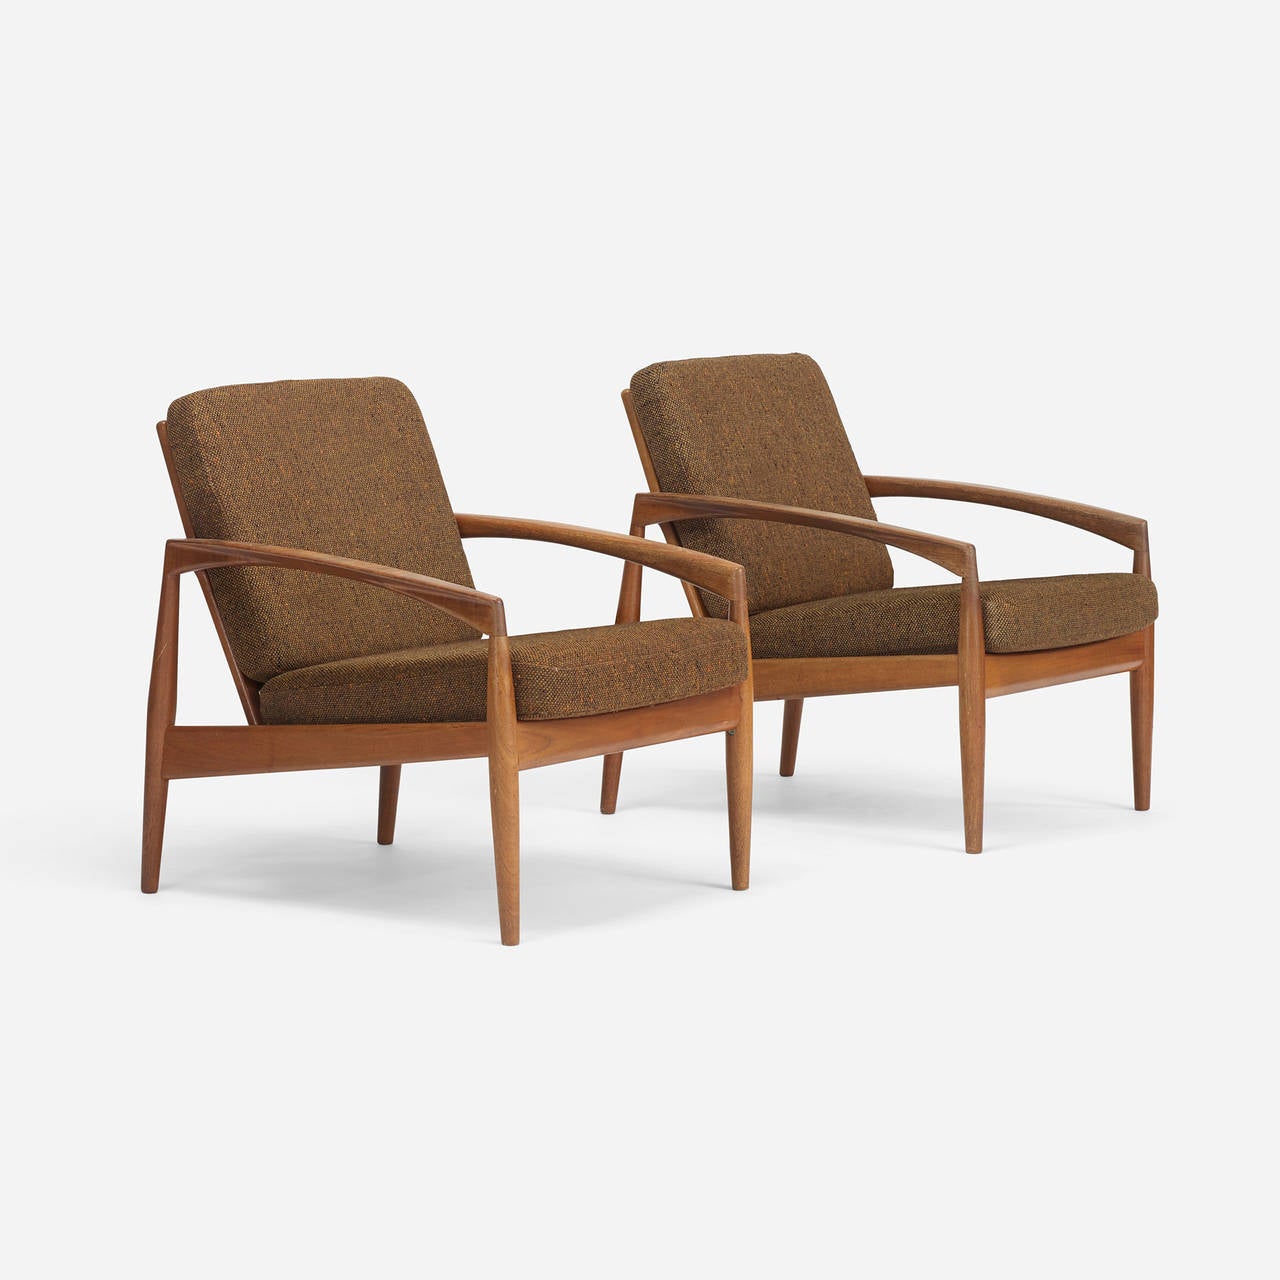 pair of lounge chairs, model 121 by Kai Kristiansen for Magnus Olesen